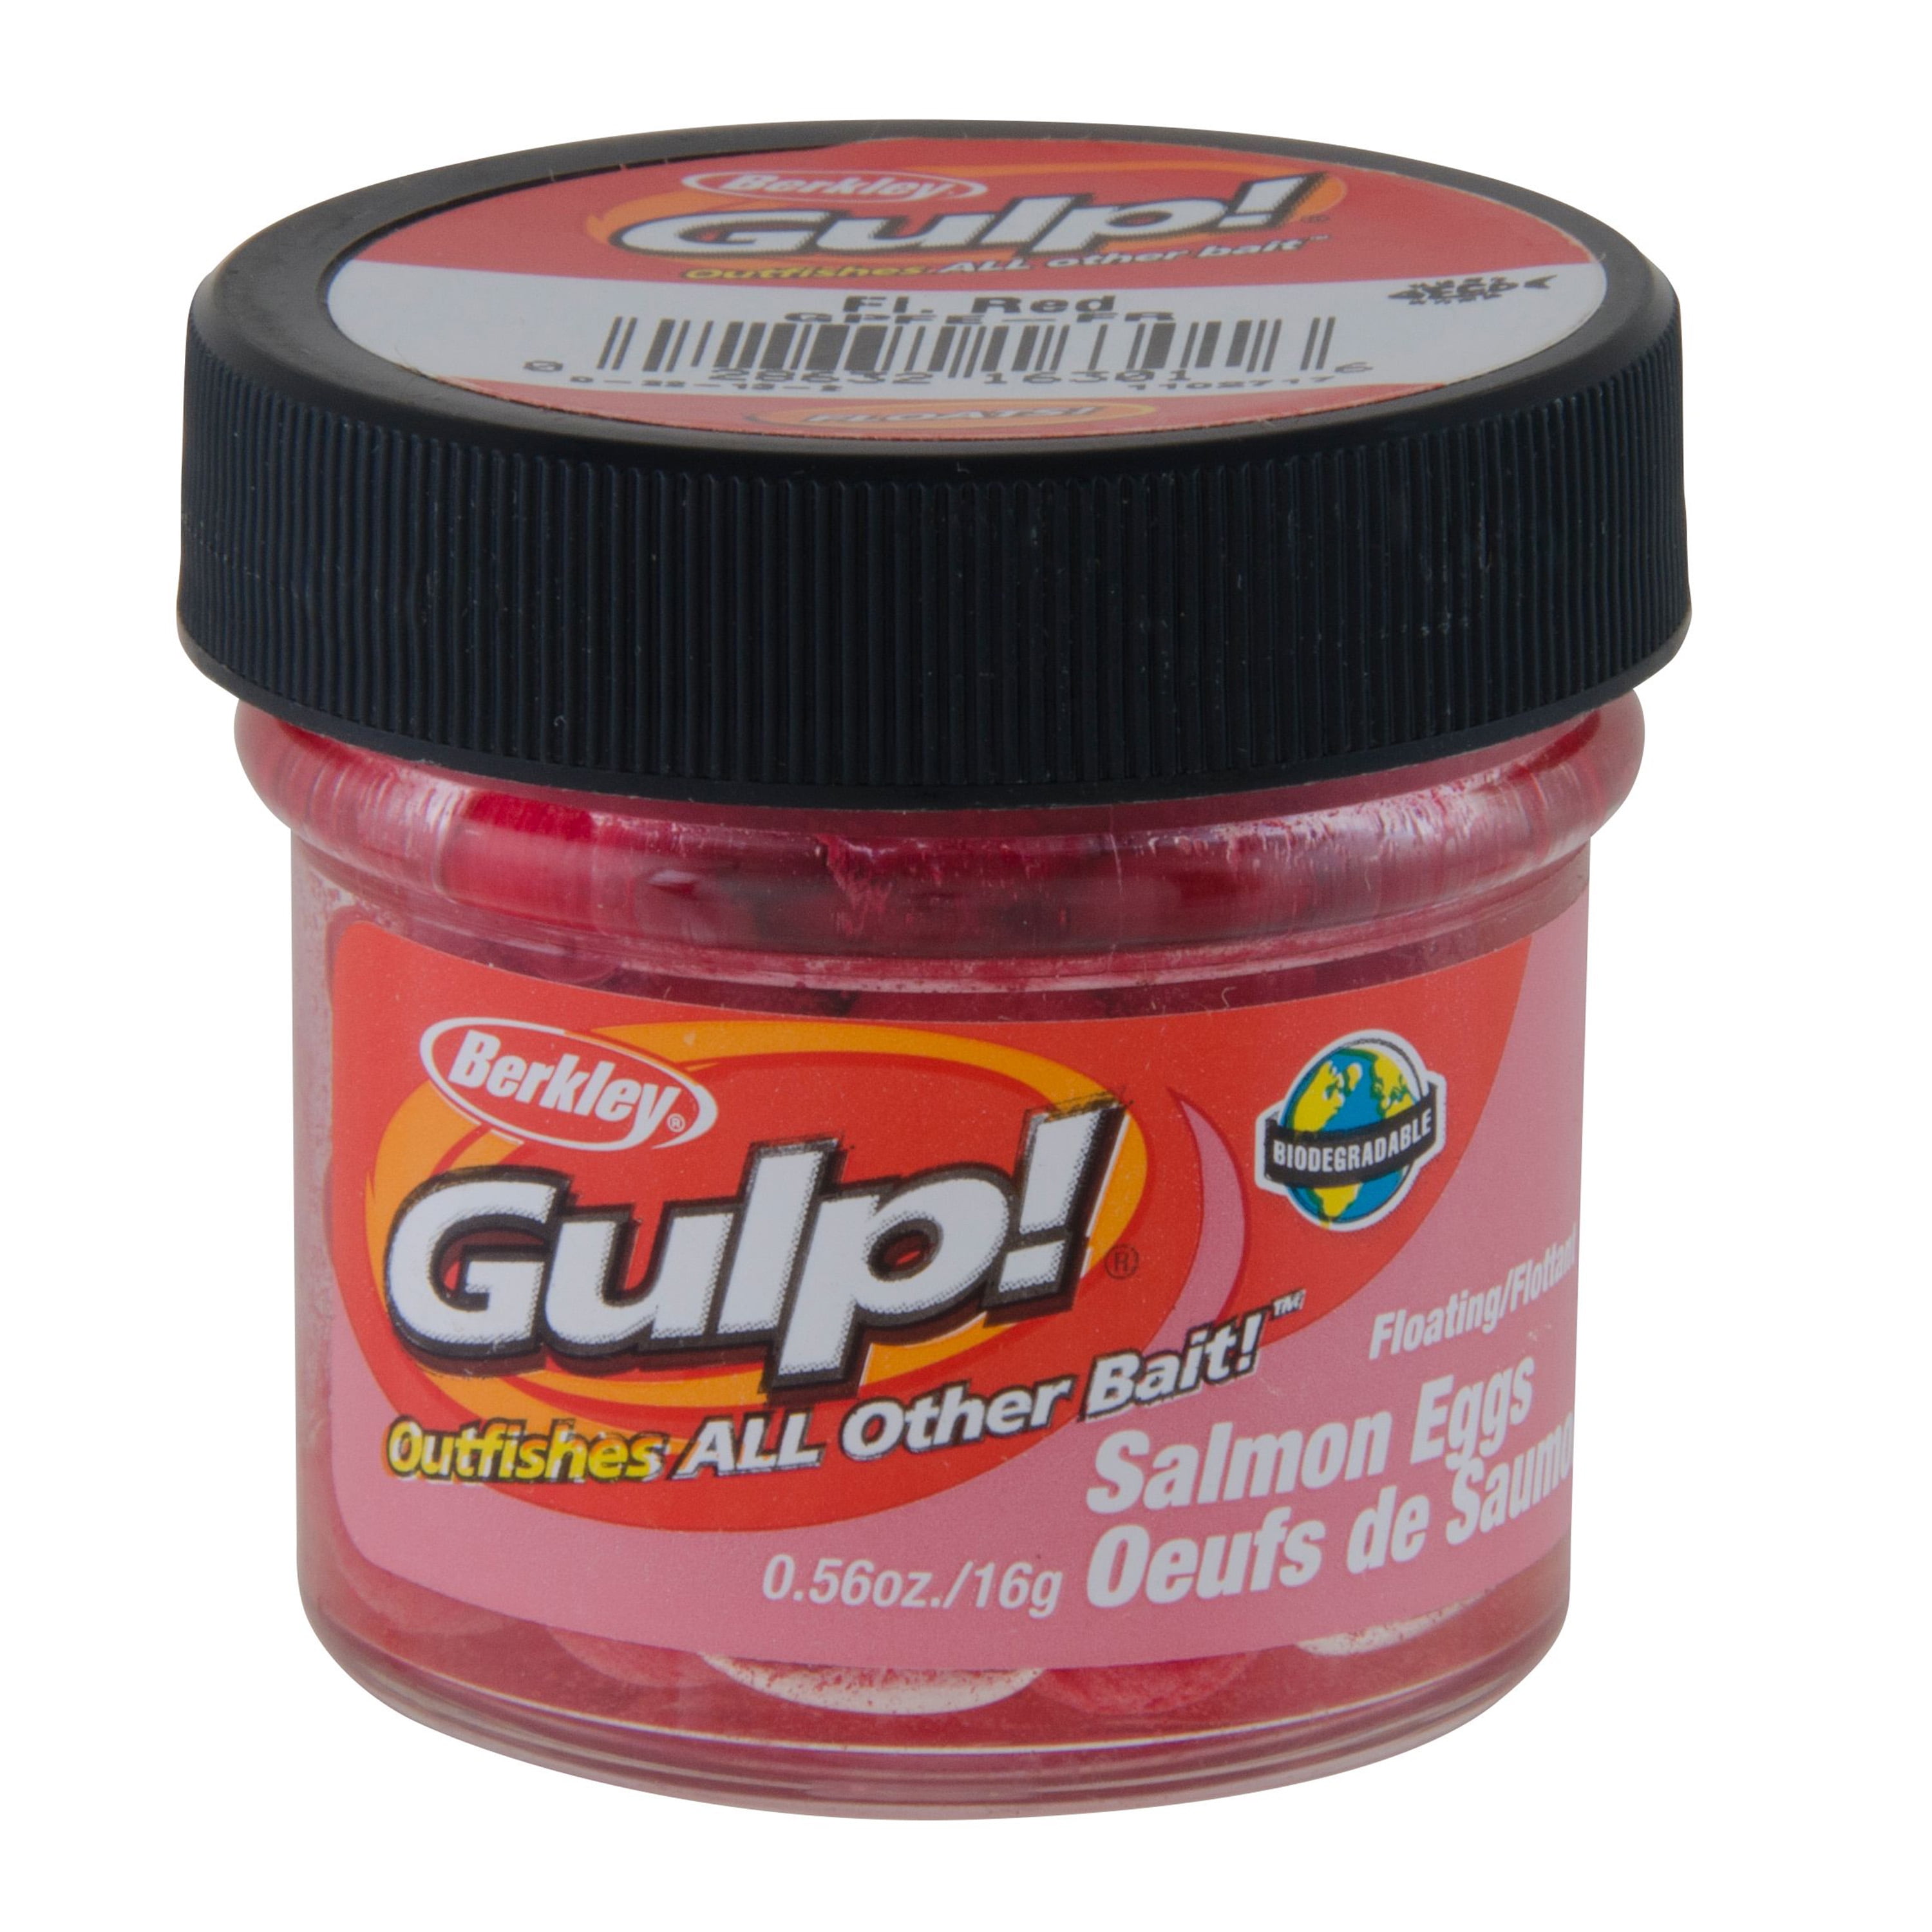 Berkley Gulp! Floating Salmon Eggs - Pink